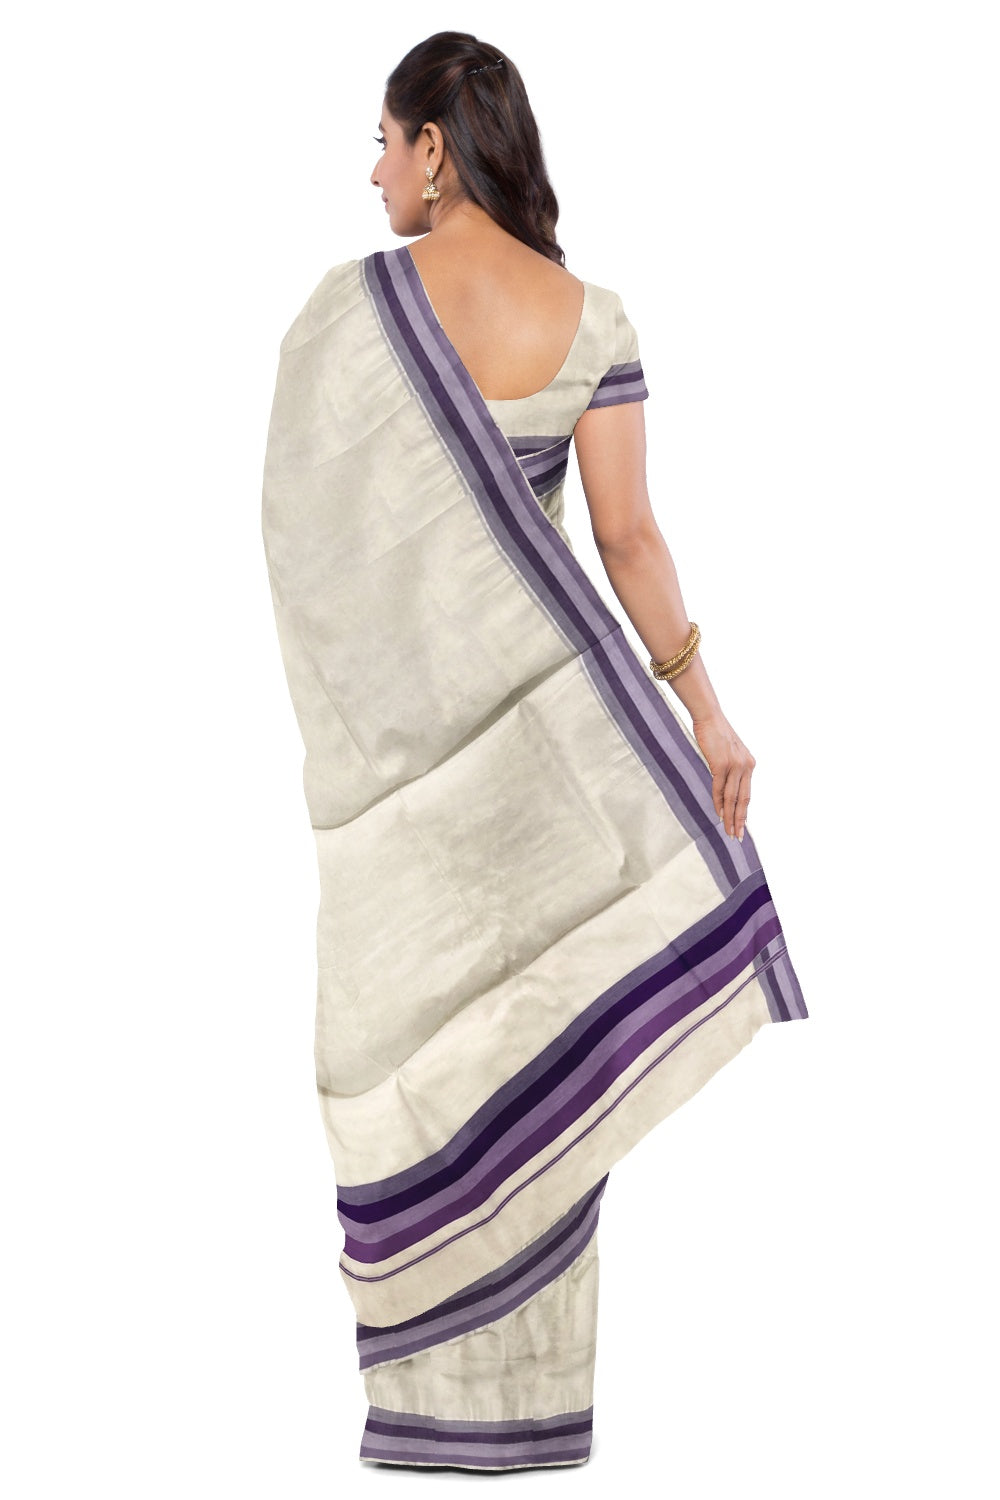 Kerala Cotton Saree with Violet Lines Border Design